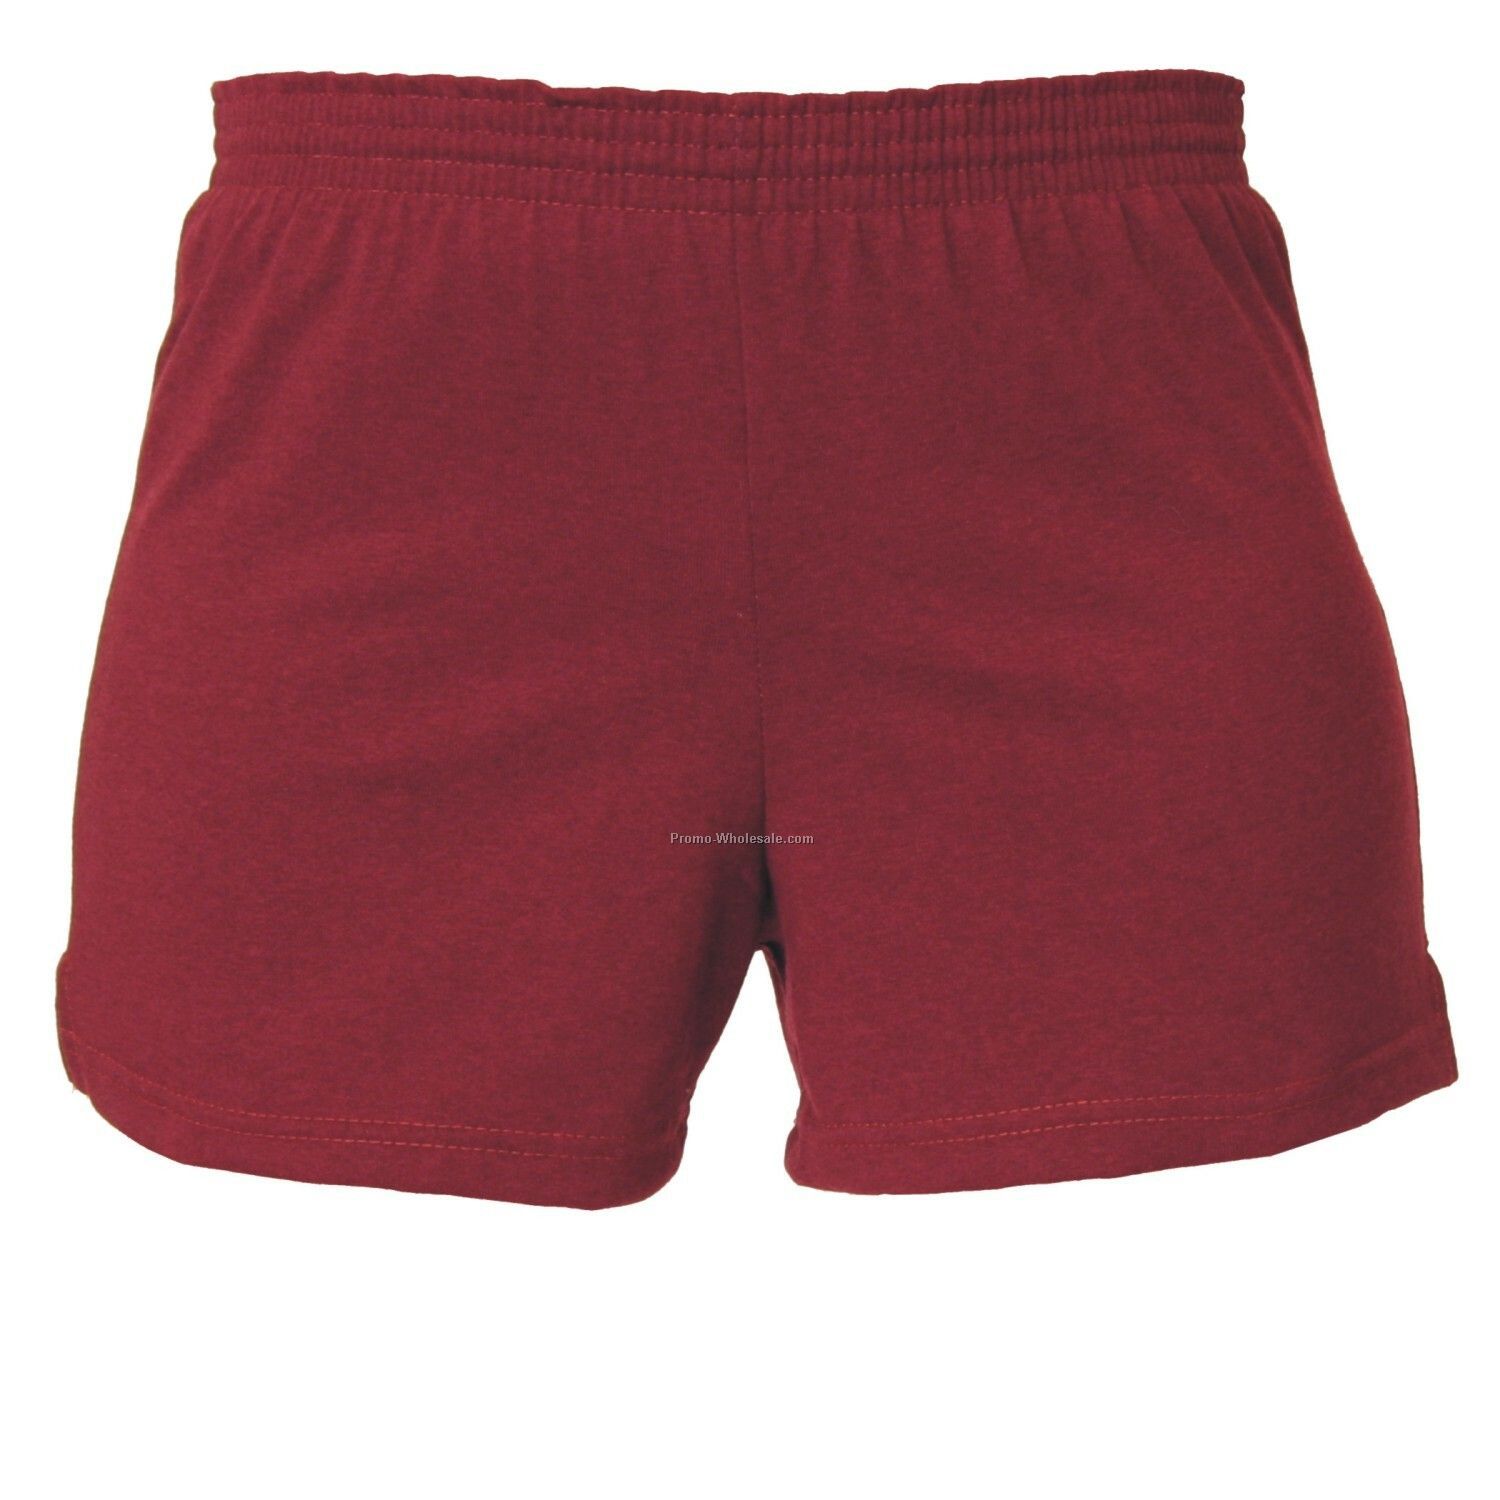 Adults' Maroon Red Spirit Shorts (Xs-xl)